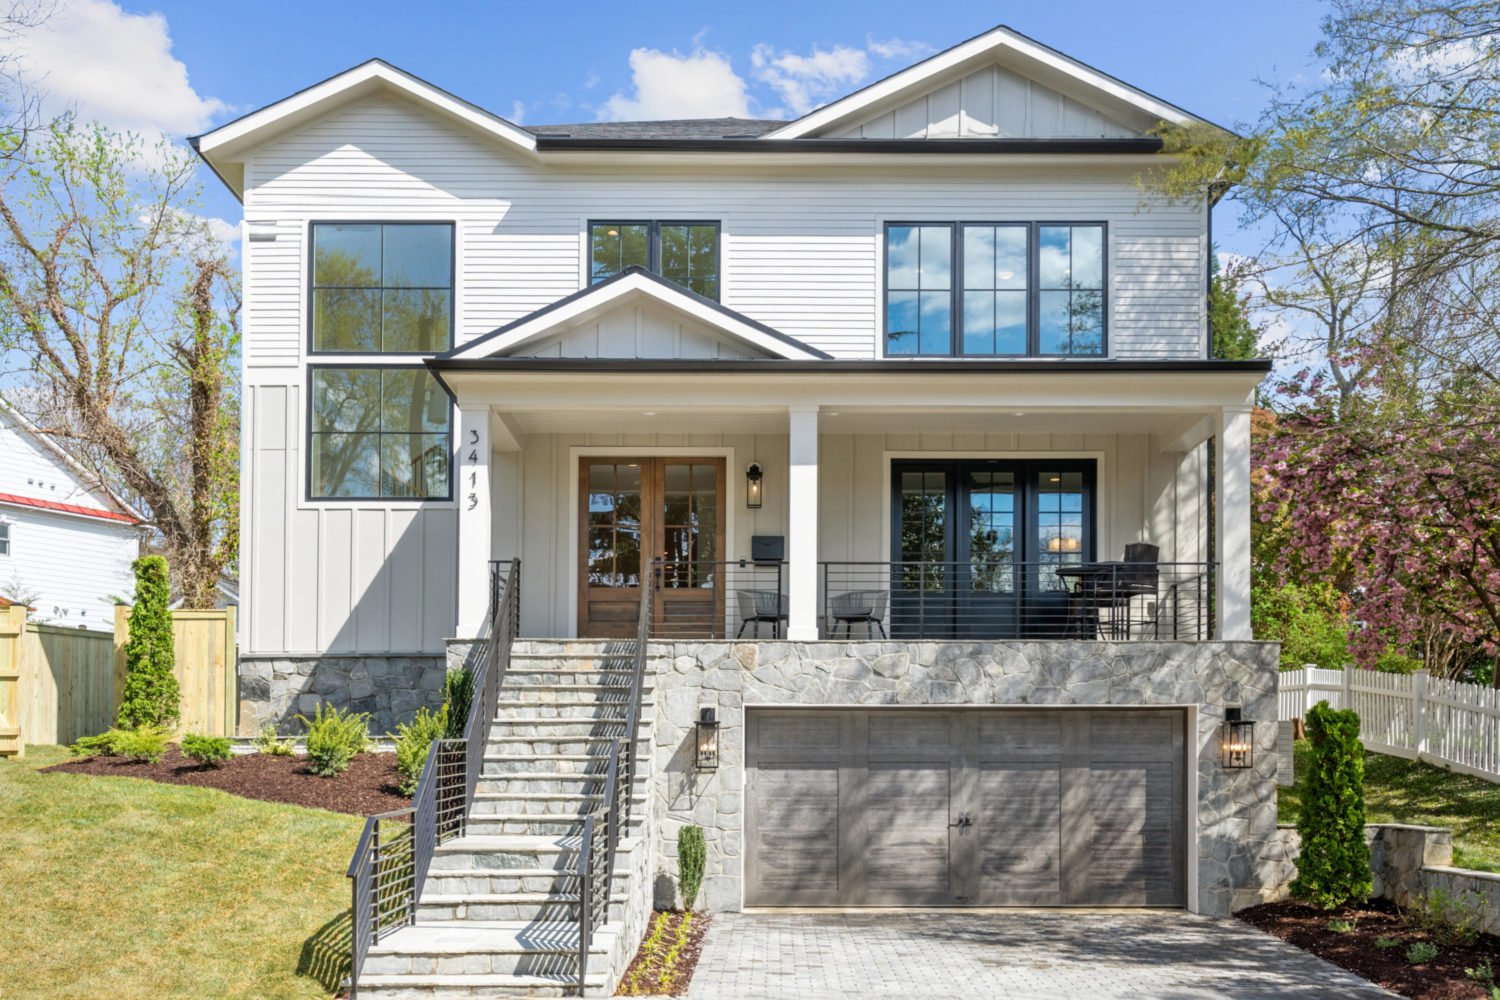 Luxurious New Home in the Desirable Cherrydale Neighborhood of Arlington, VA!